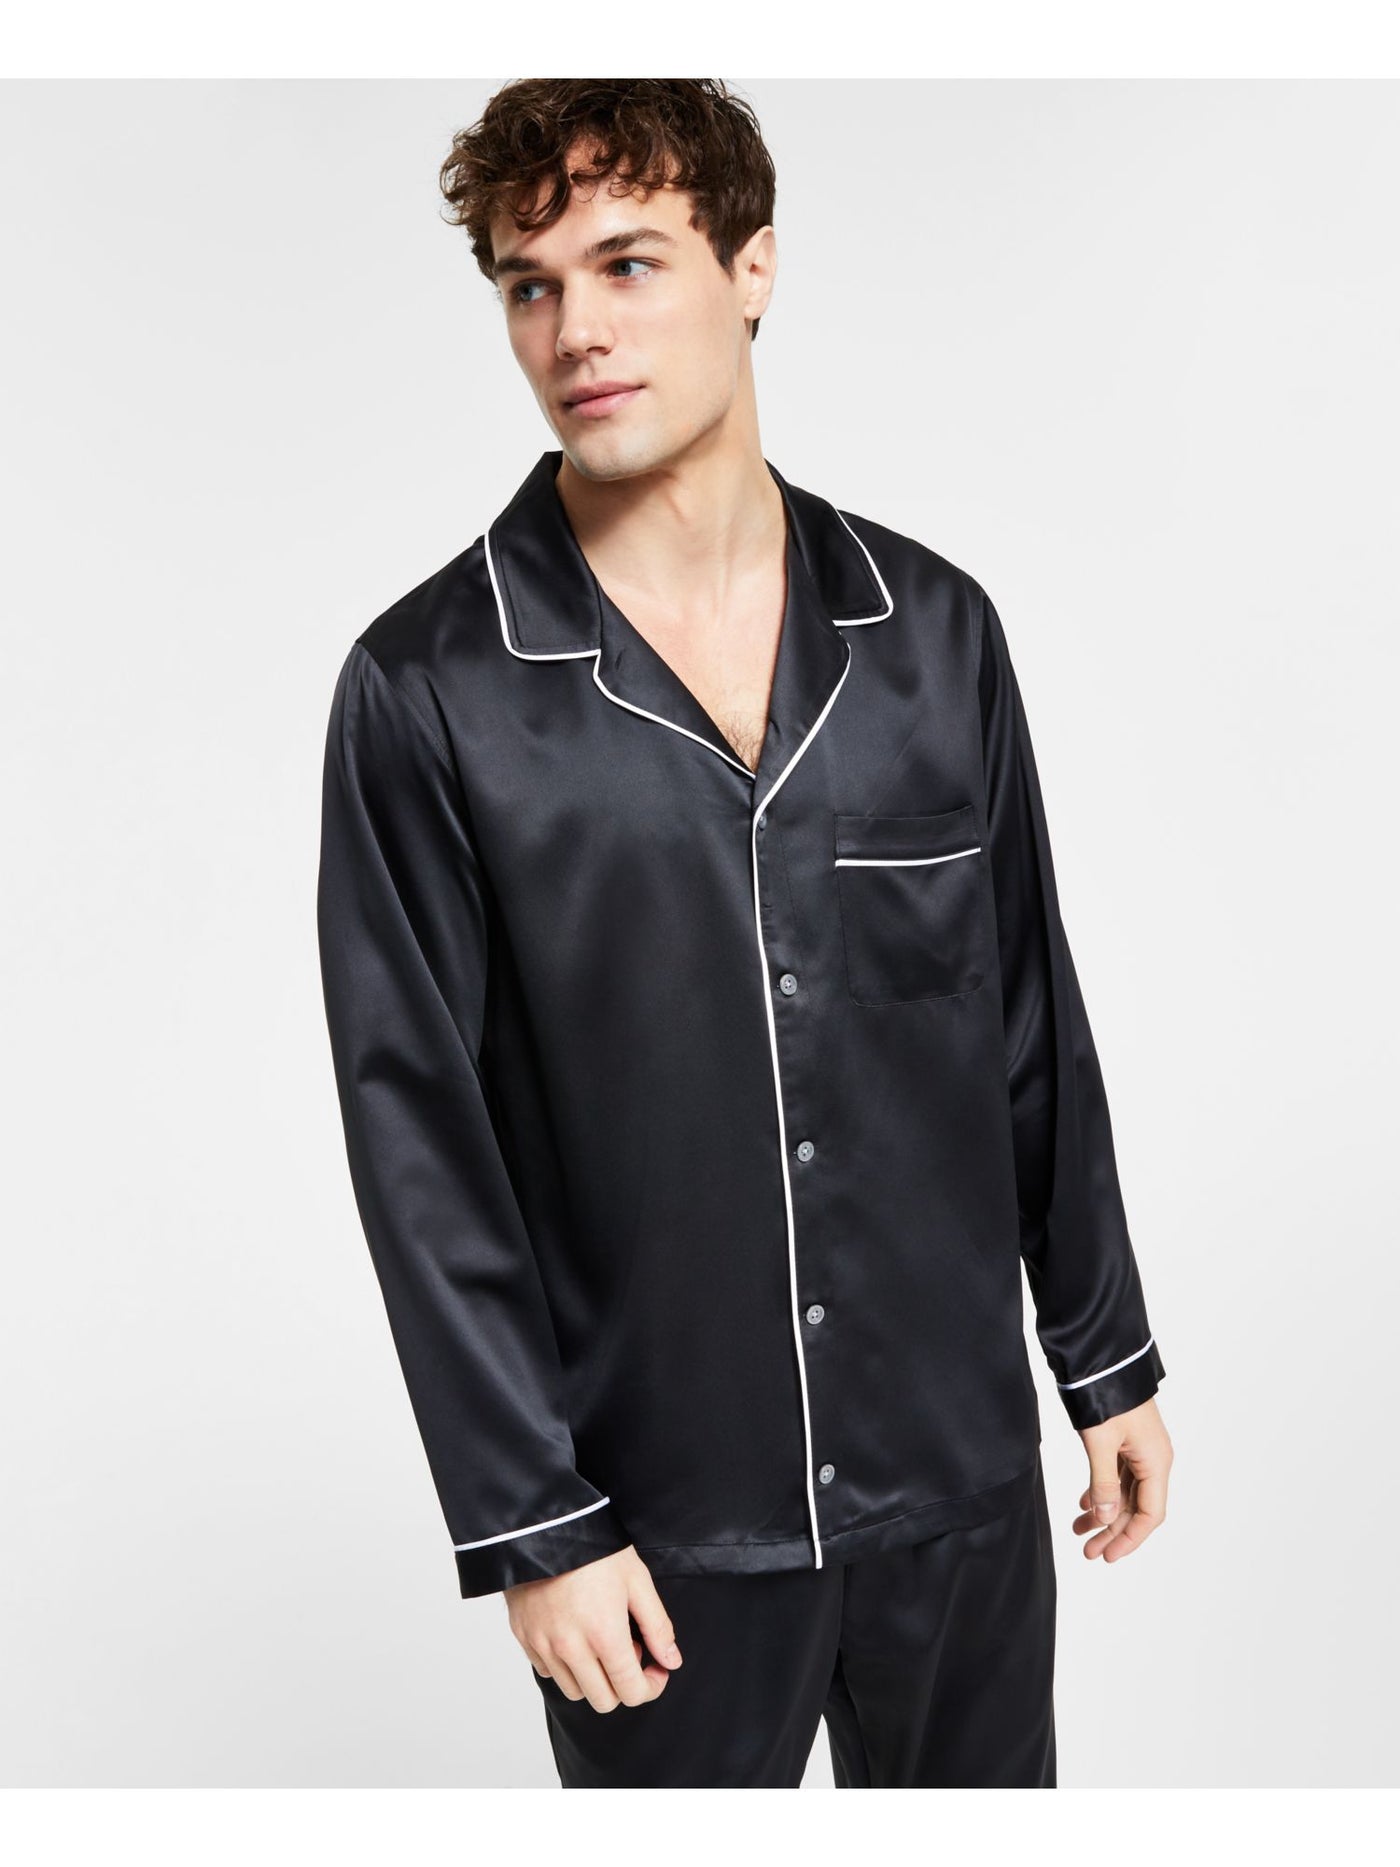 INC Intimates Black Notched Collar Pocketed Sleep Shirt Pajama Top L